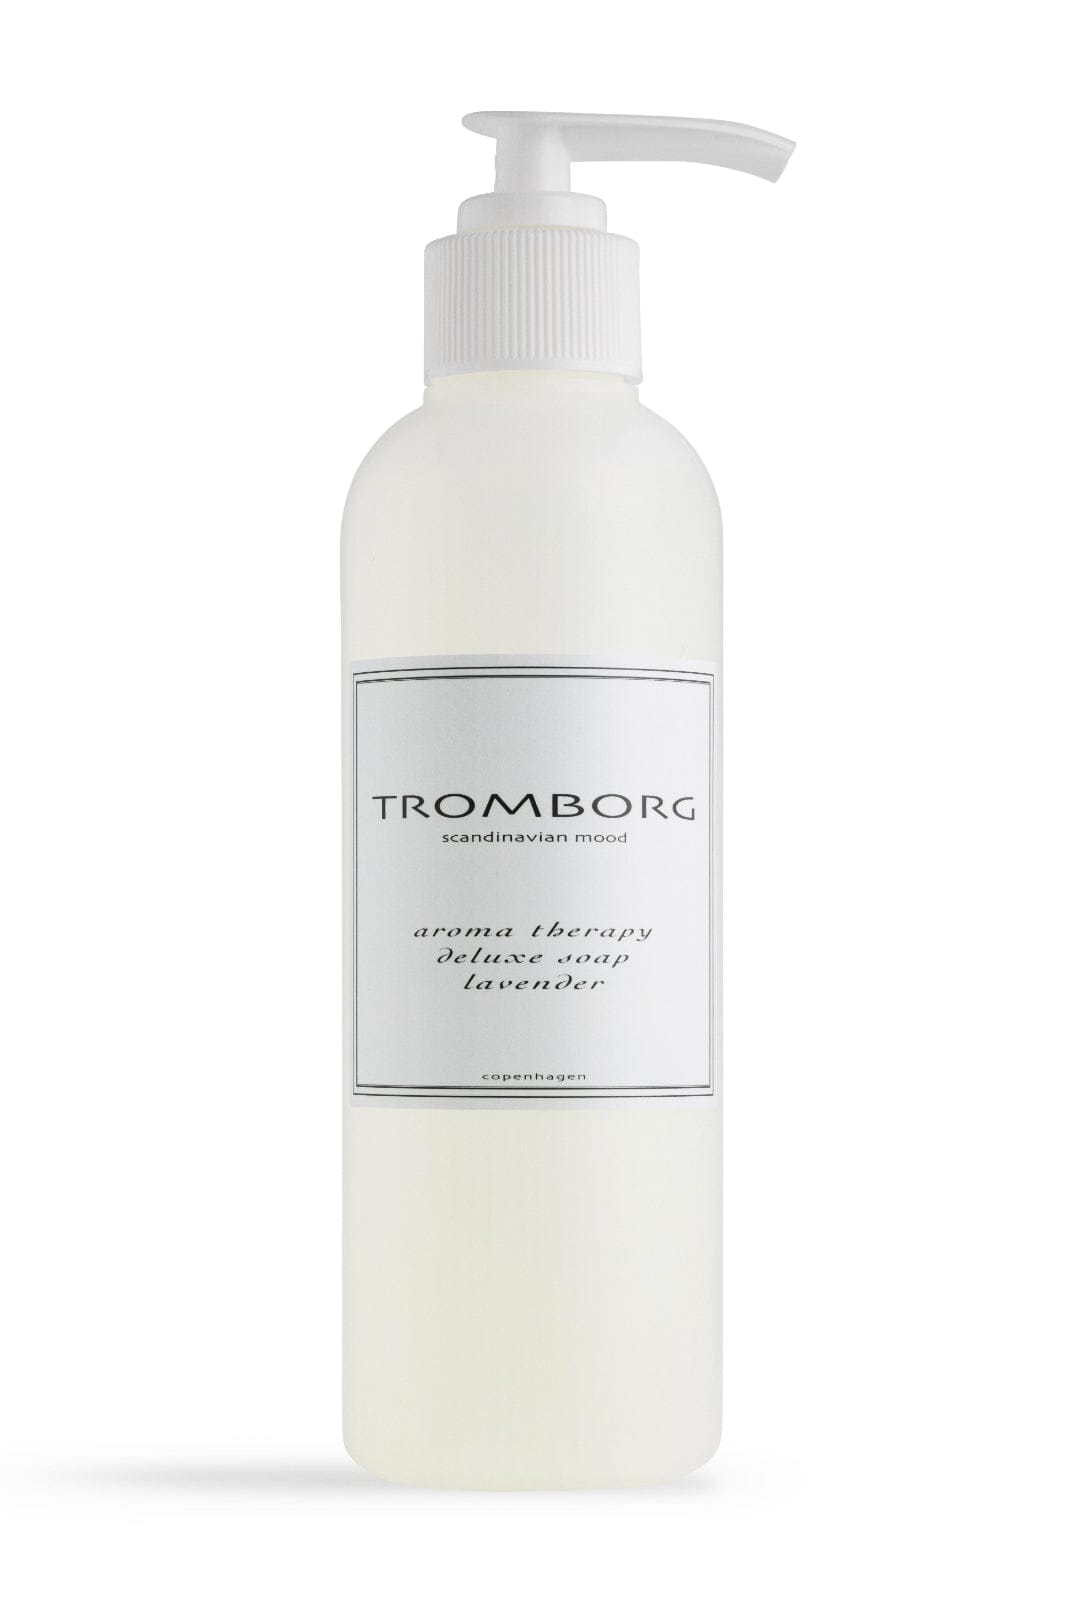 Tromborg - Aroma Therapy Deluxe Soap Lavender Håndsæber 